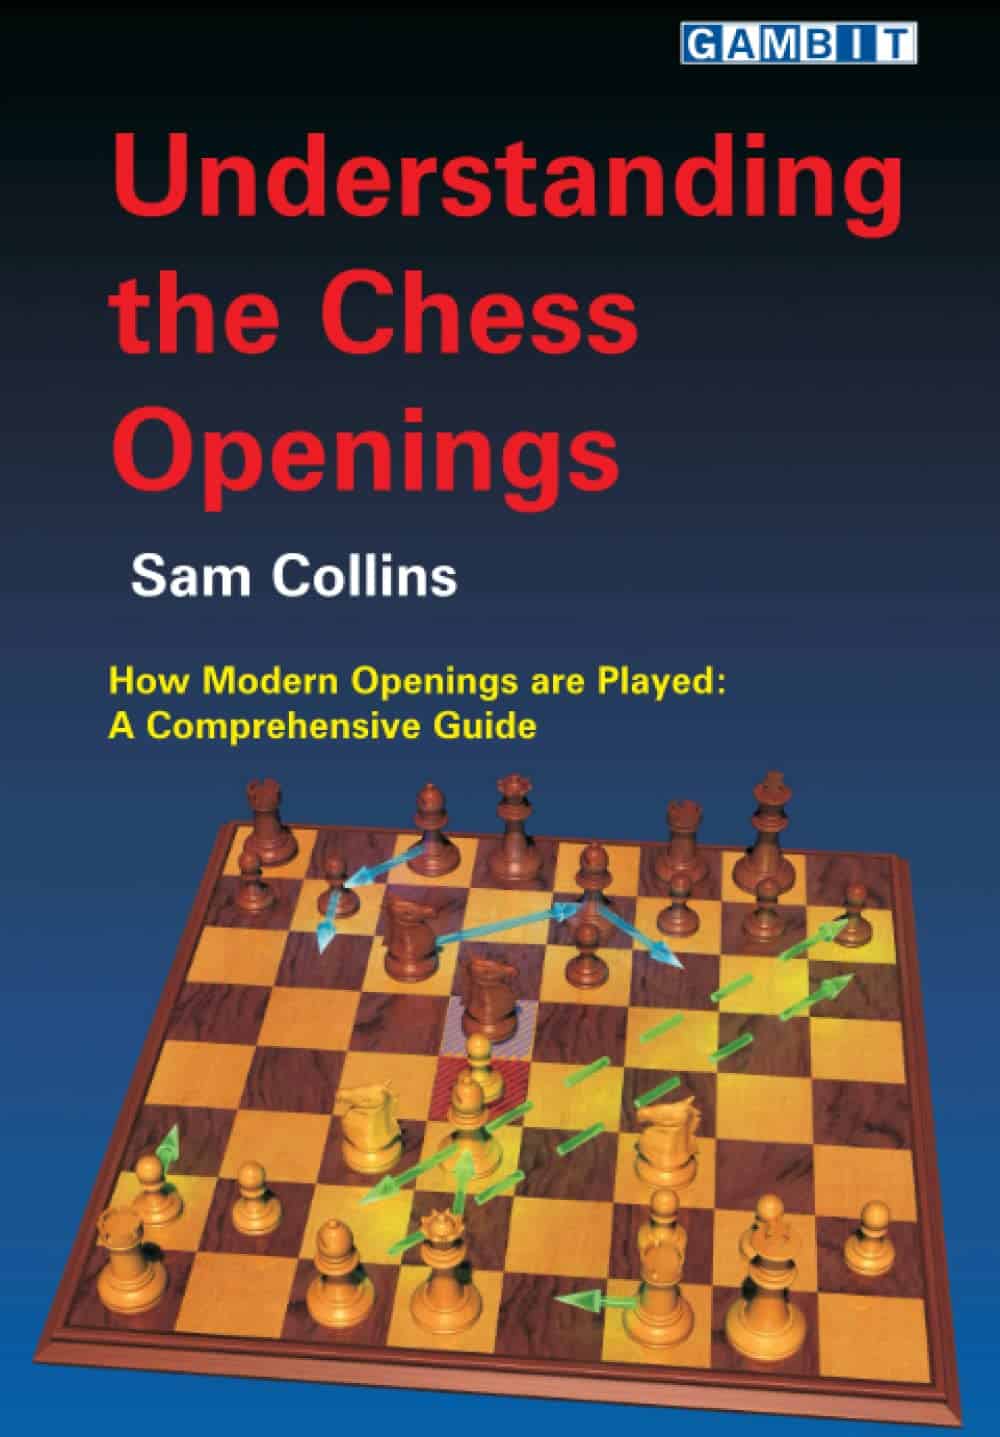 List of Chess Gambits, PDF, Chess Openings